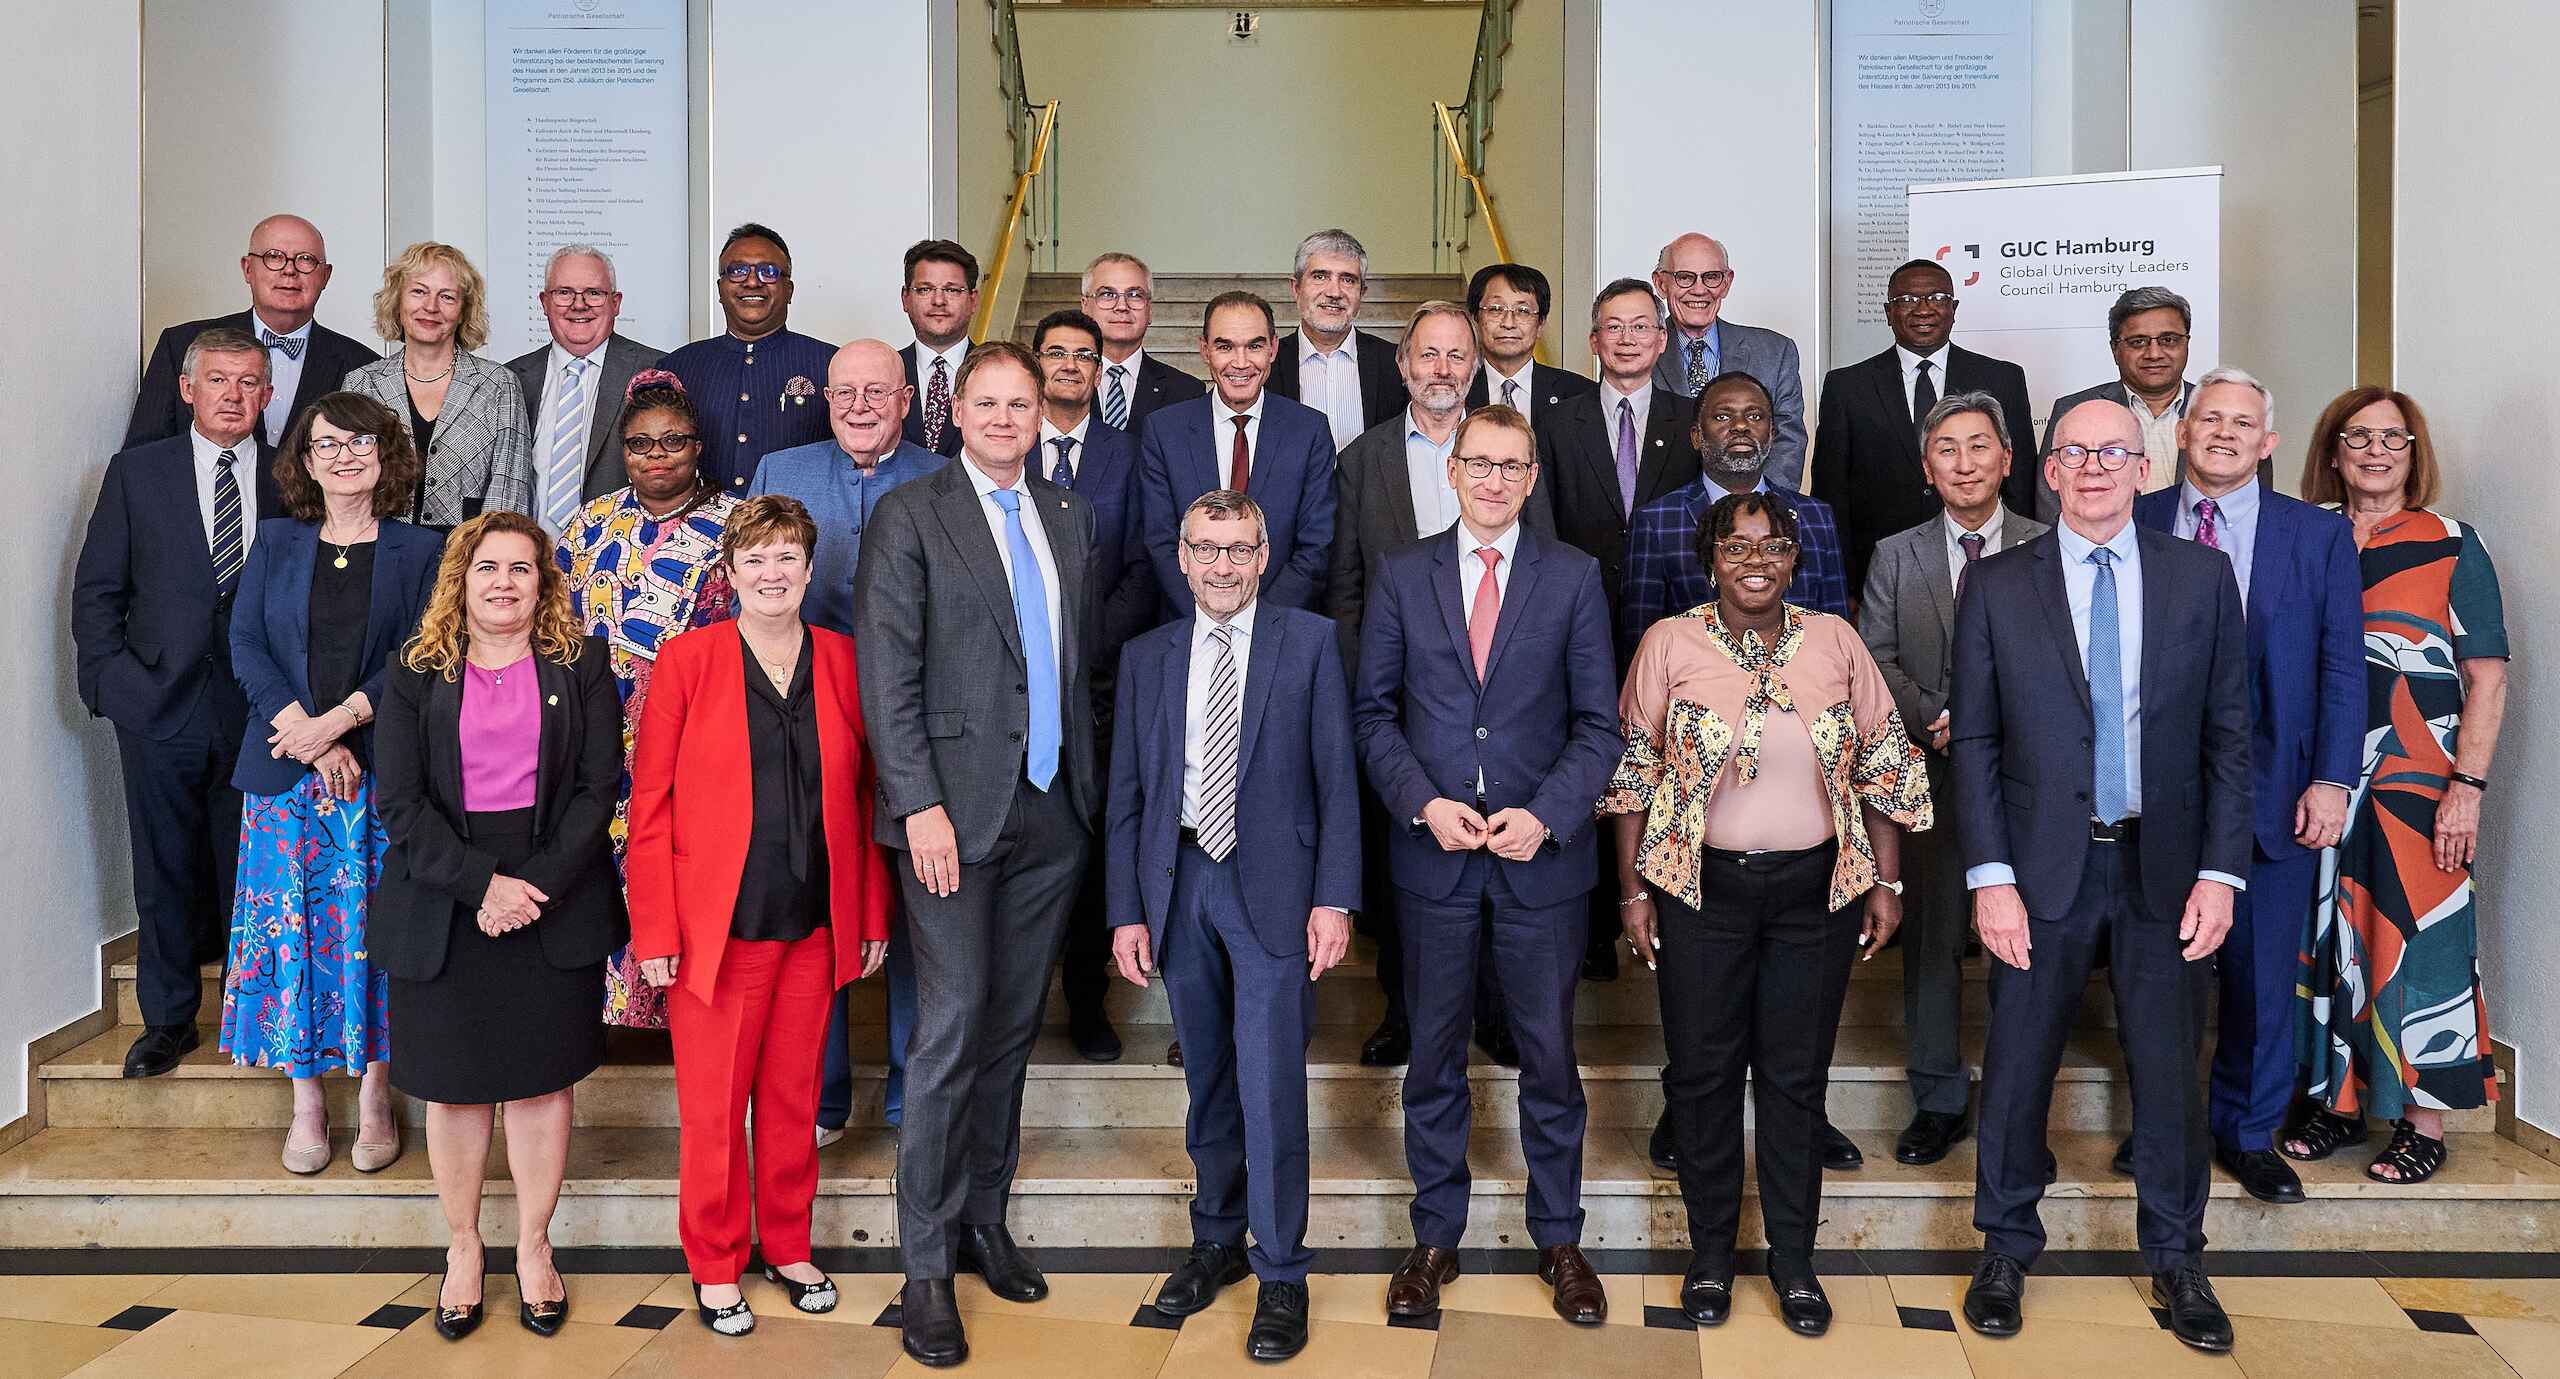 Gruppenbild vom Global University Leaders Council (GUC) Hamburg 2019